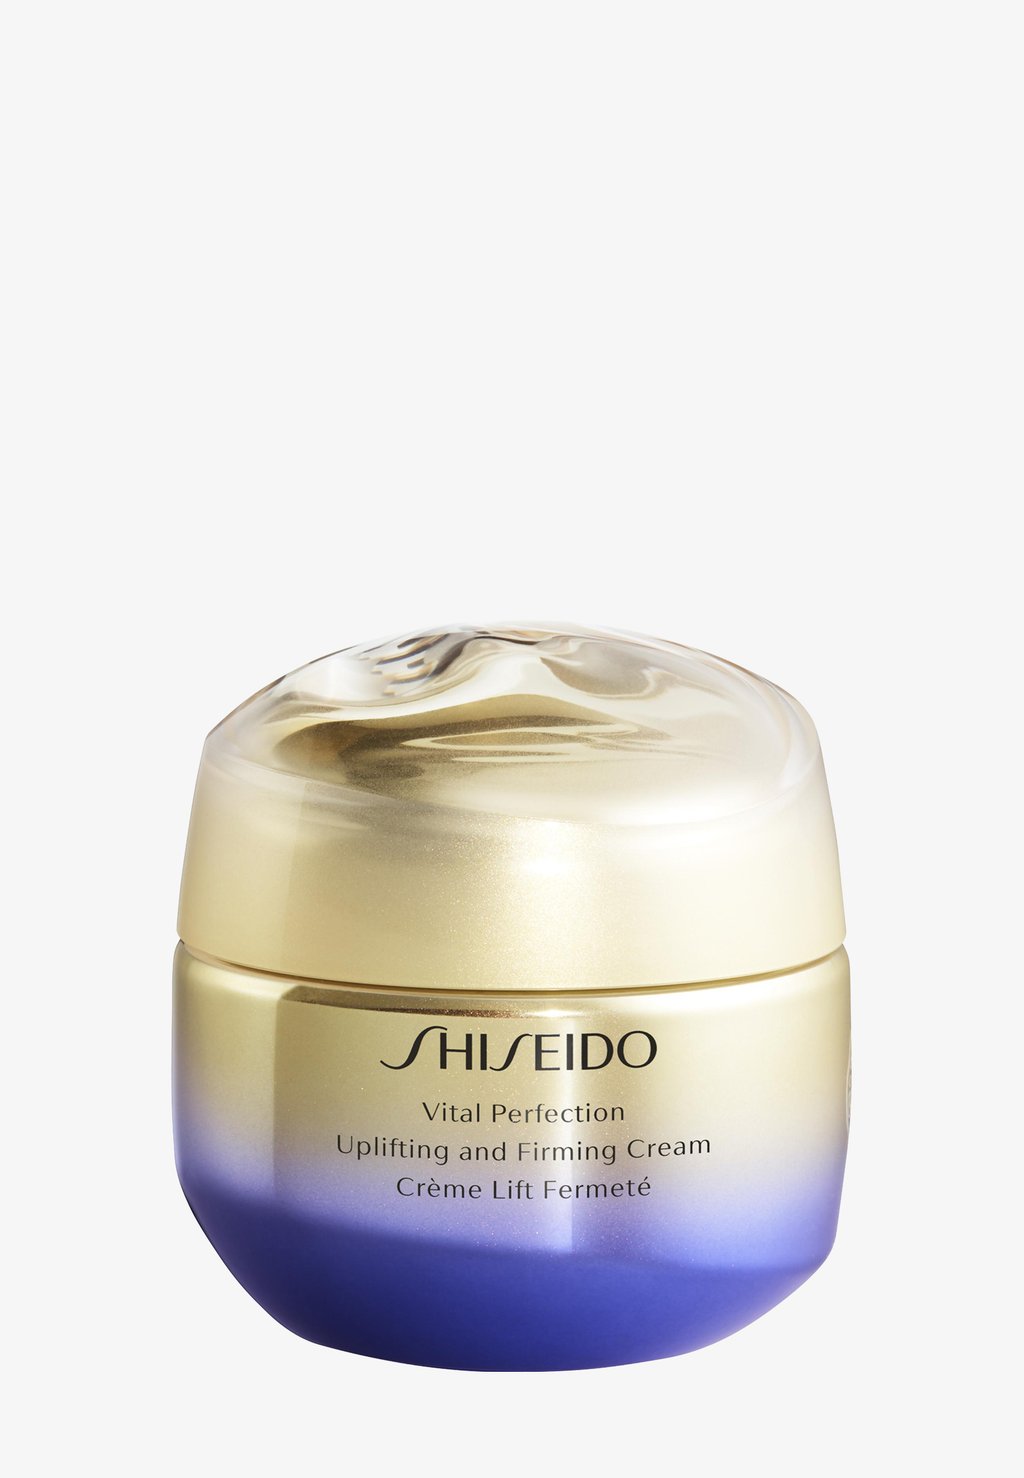 Дневной крем Vital Perfection Uplifting And Firming Cream 50Ml Shiseido фото